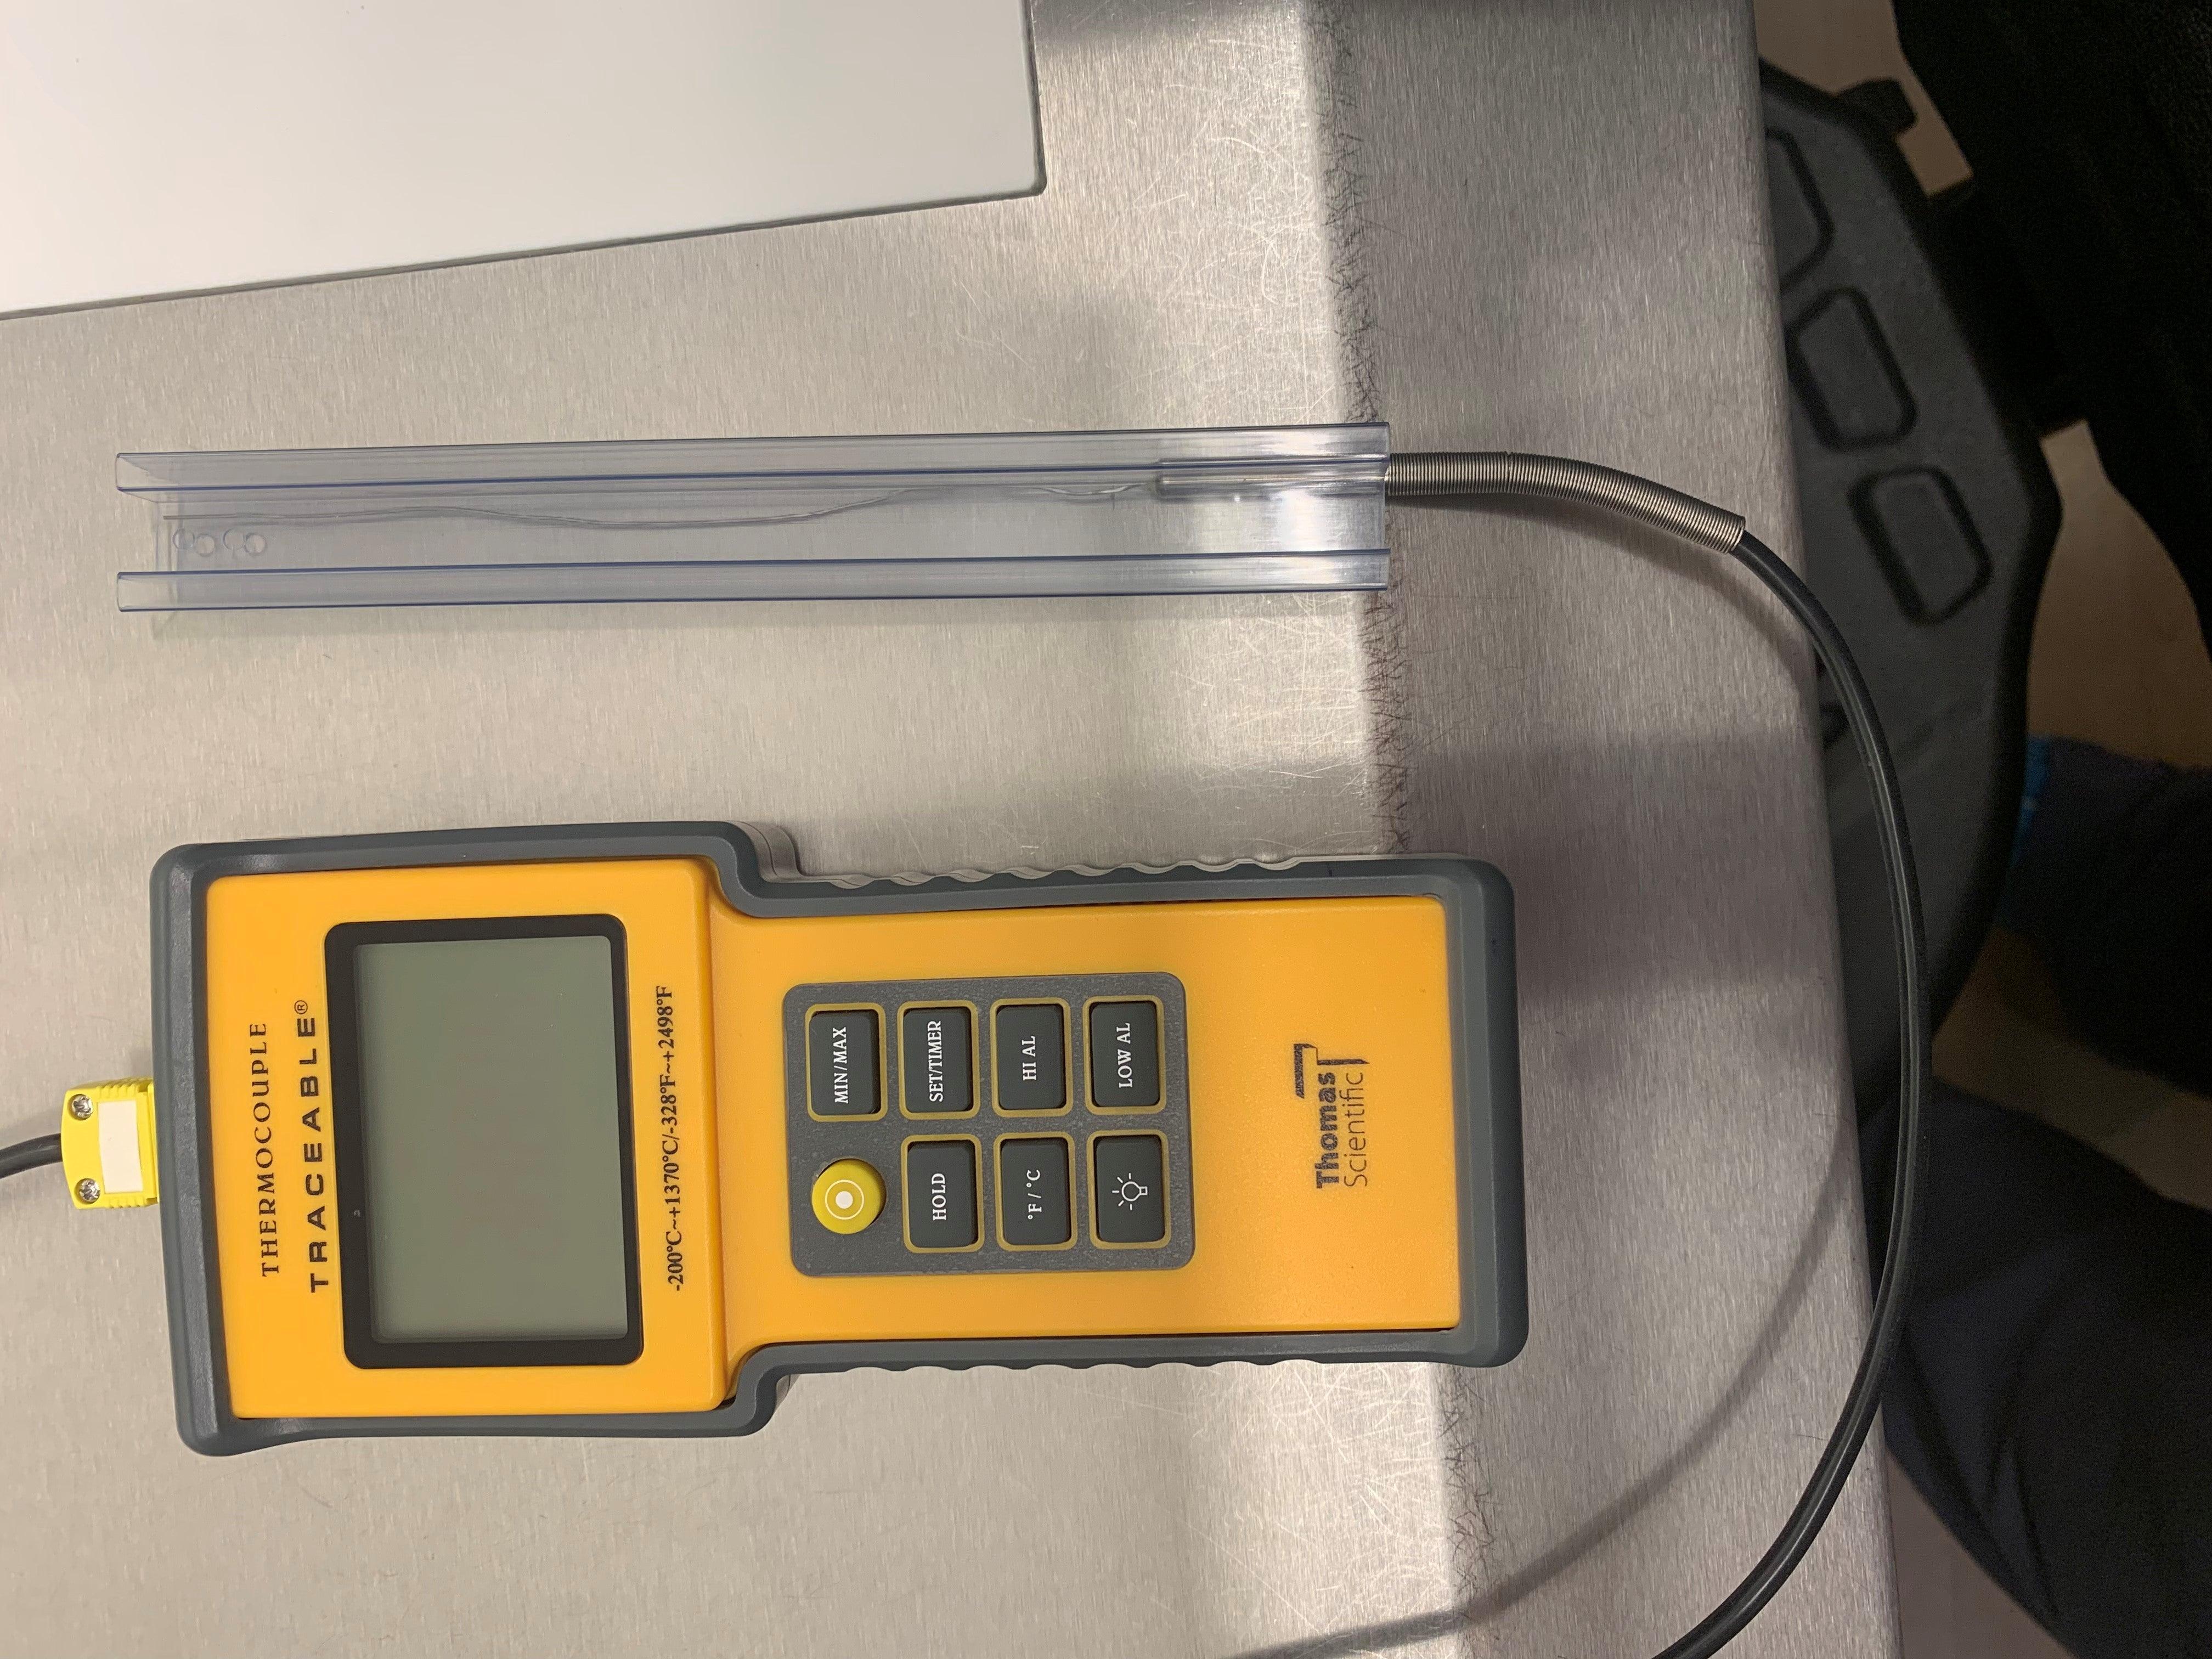 Thermometer To Measure Room Temperature at Thomas Scientific